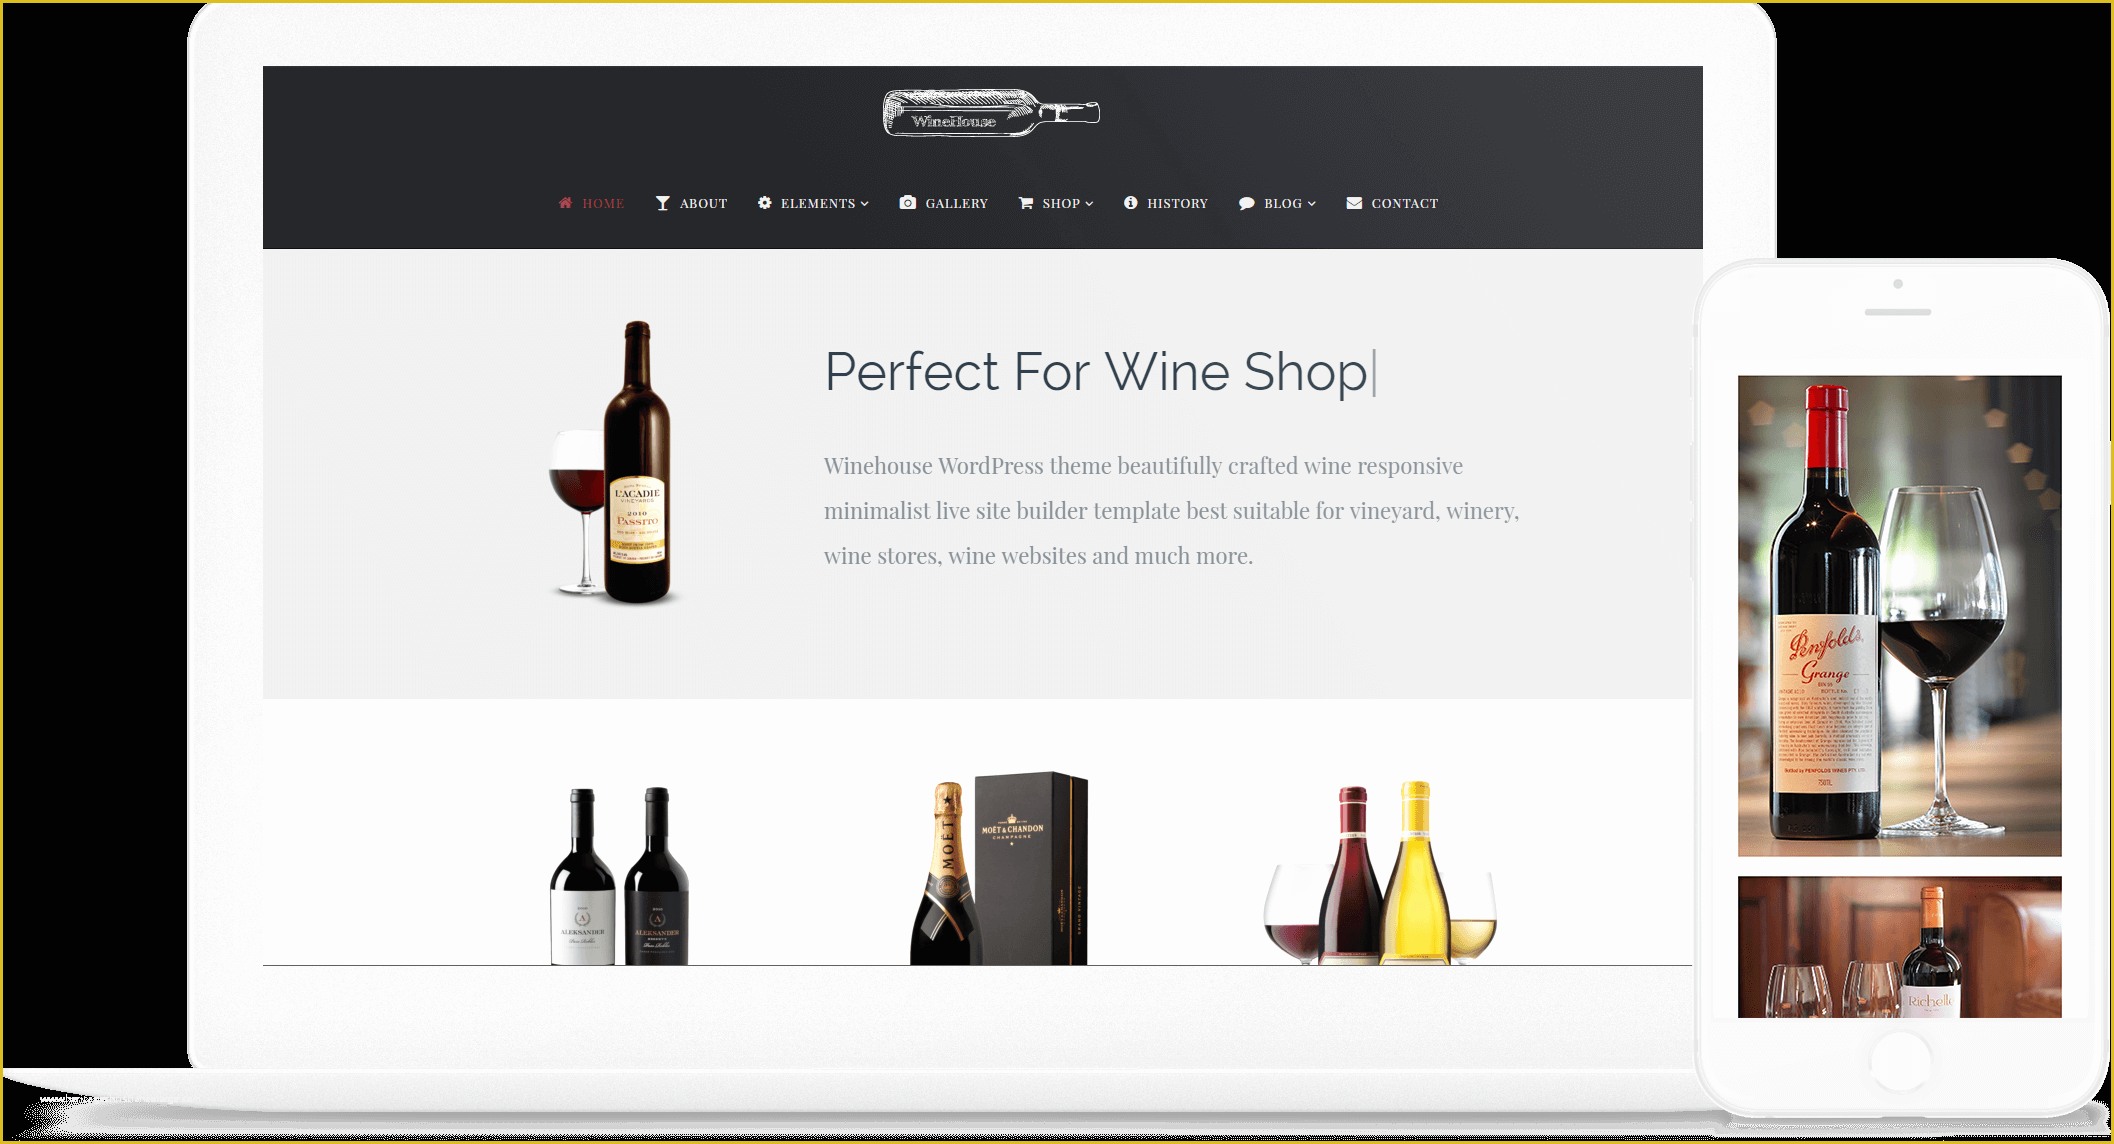 Free Wine Website Templates Download Of Winehouse Wordpress theme Responsive Visualmodo Wine